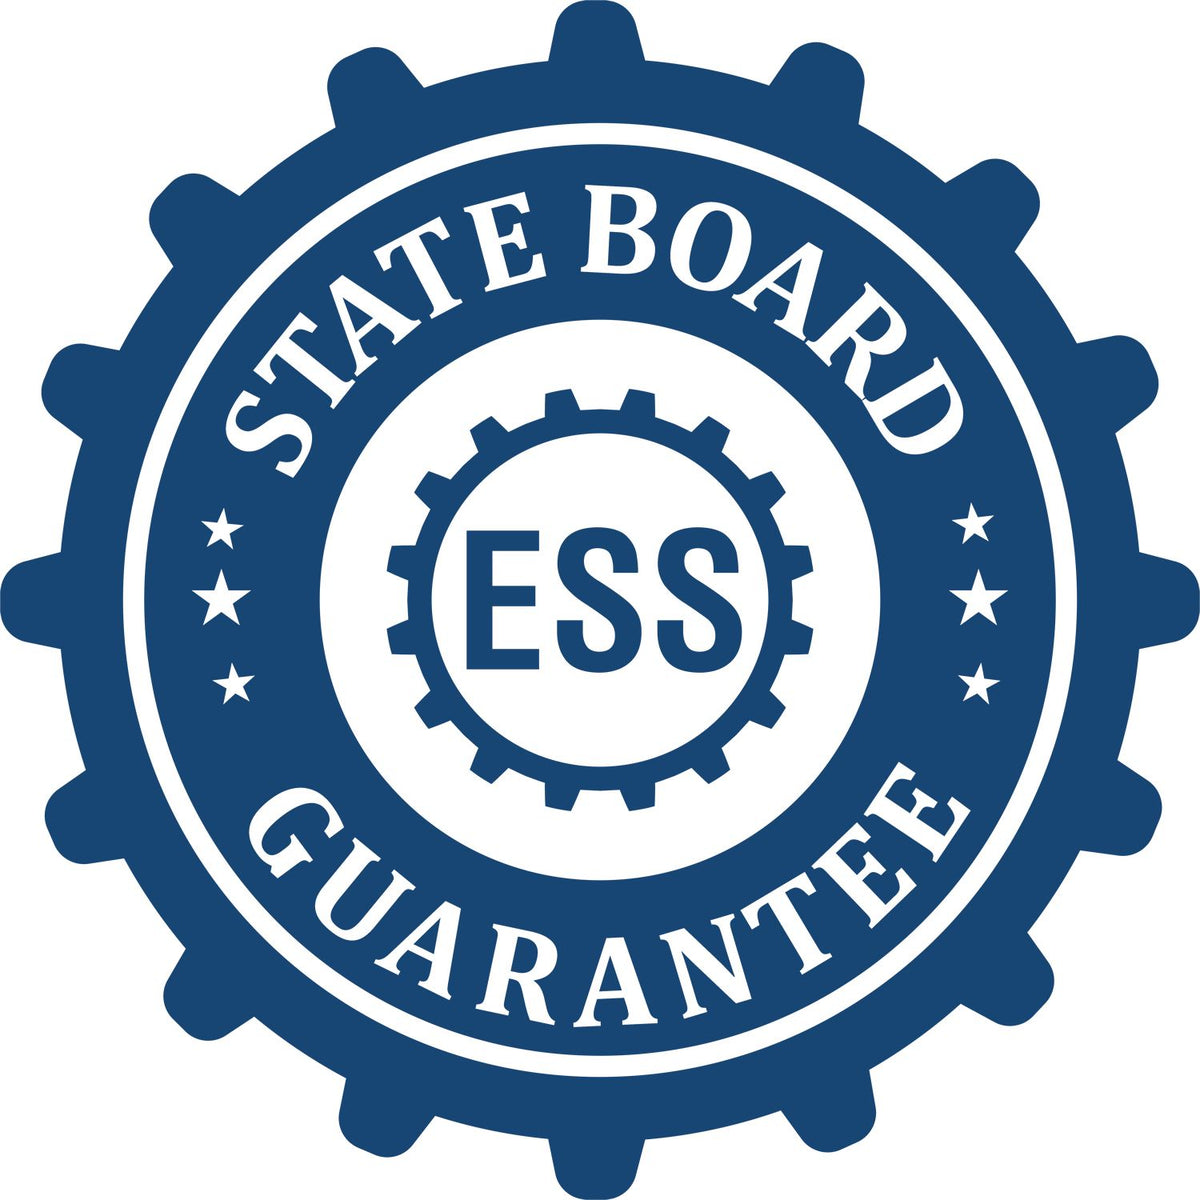 An emblem in a gear shape illustrating a state board guarantee for the Hybrid Nebraska Landscape Architect Seal